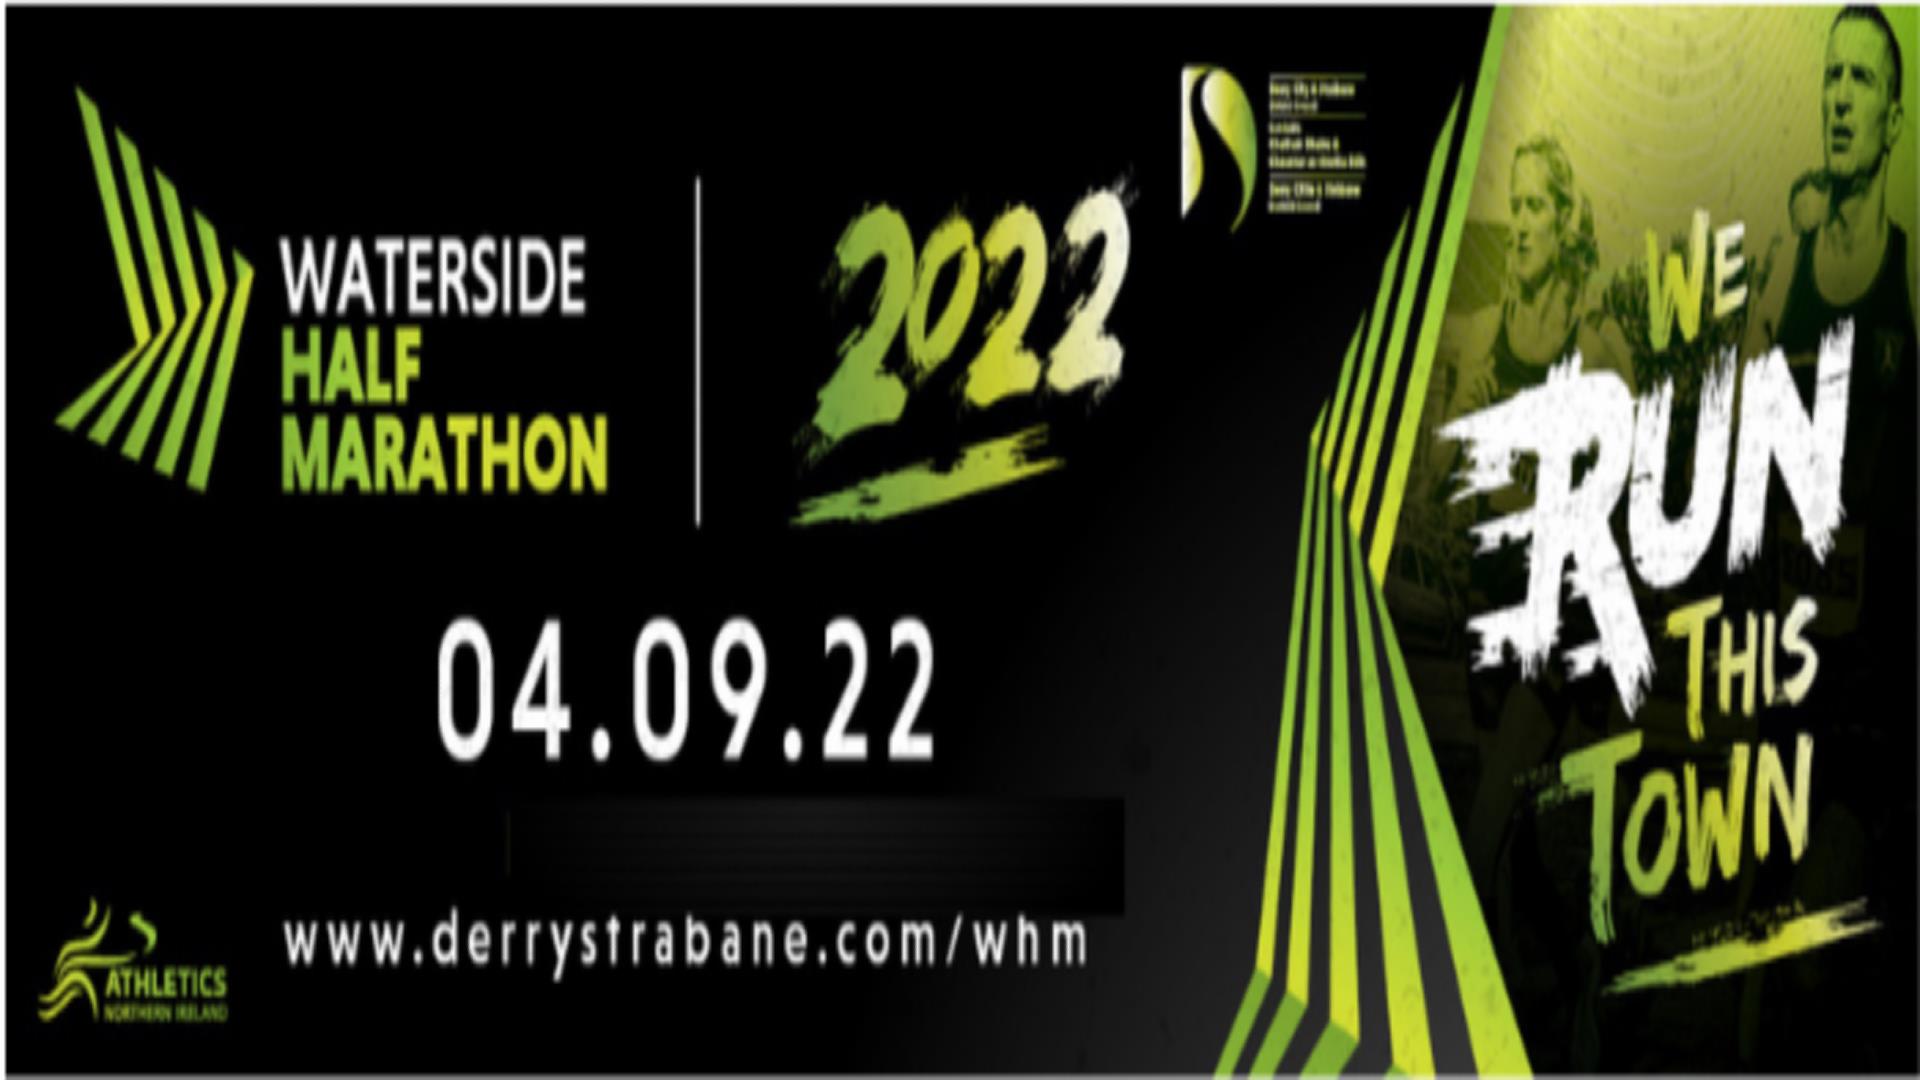 Promotional banner for the 2022 Waterside Half Marathon event.